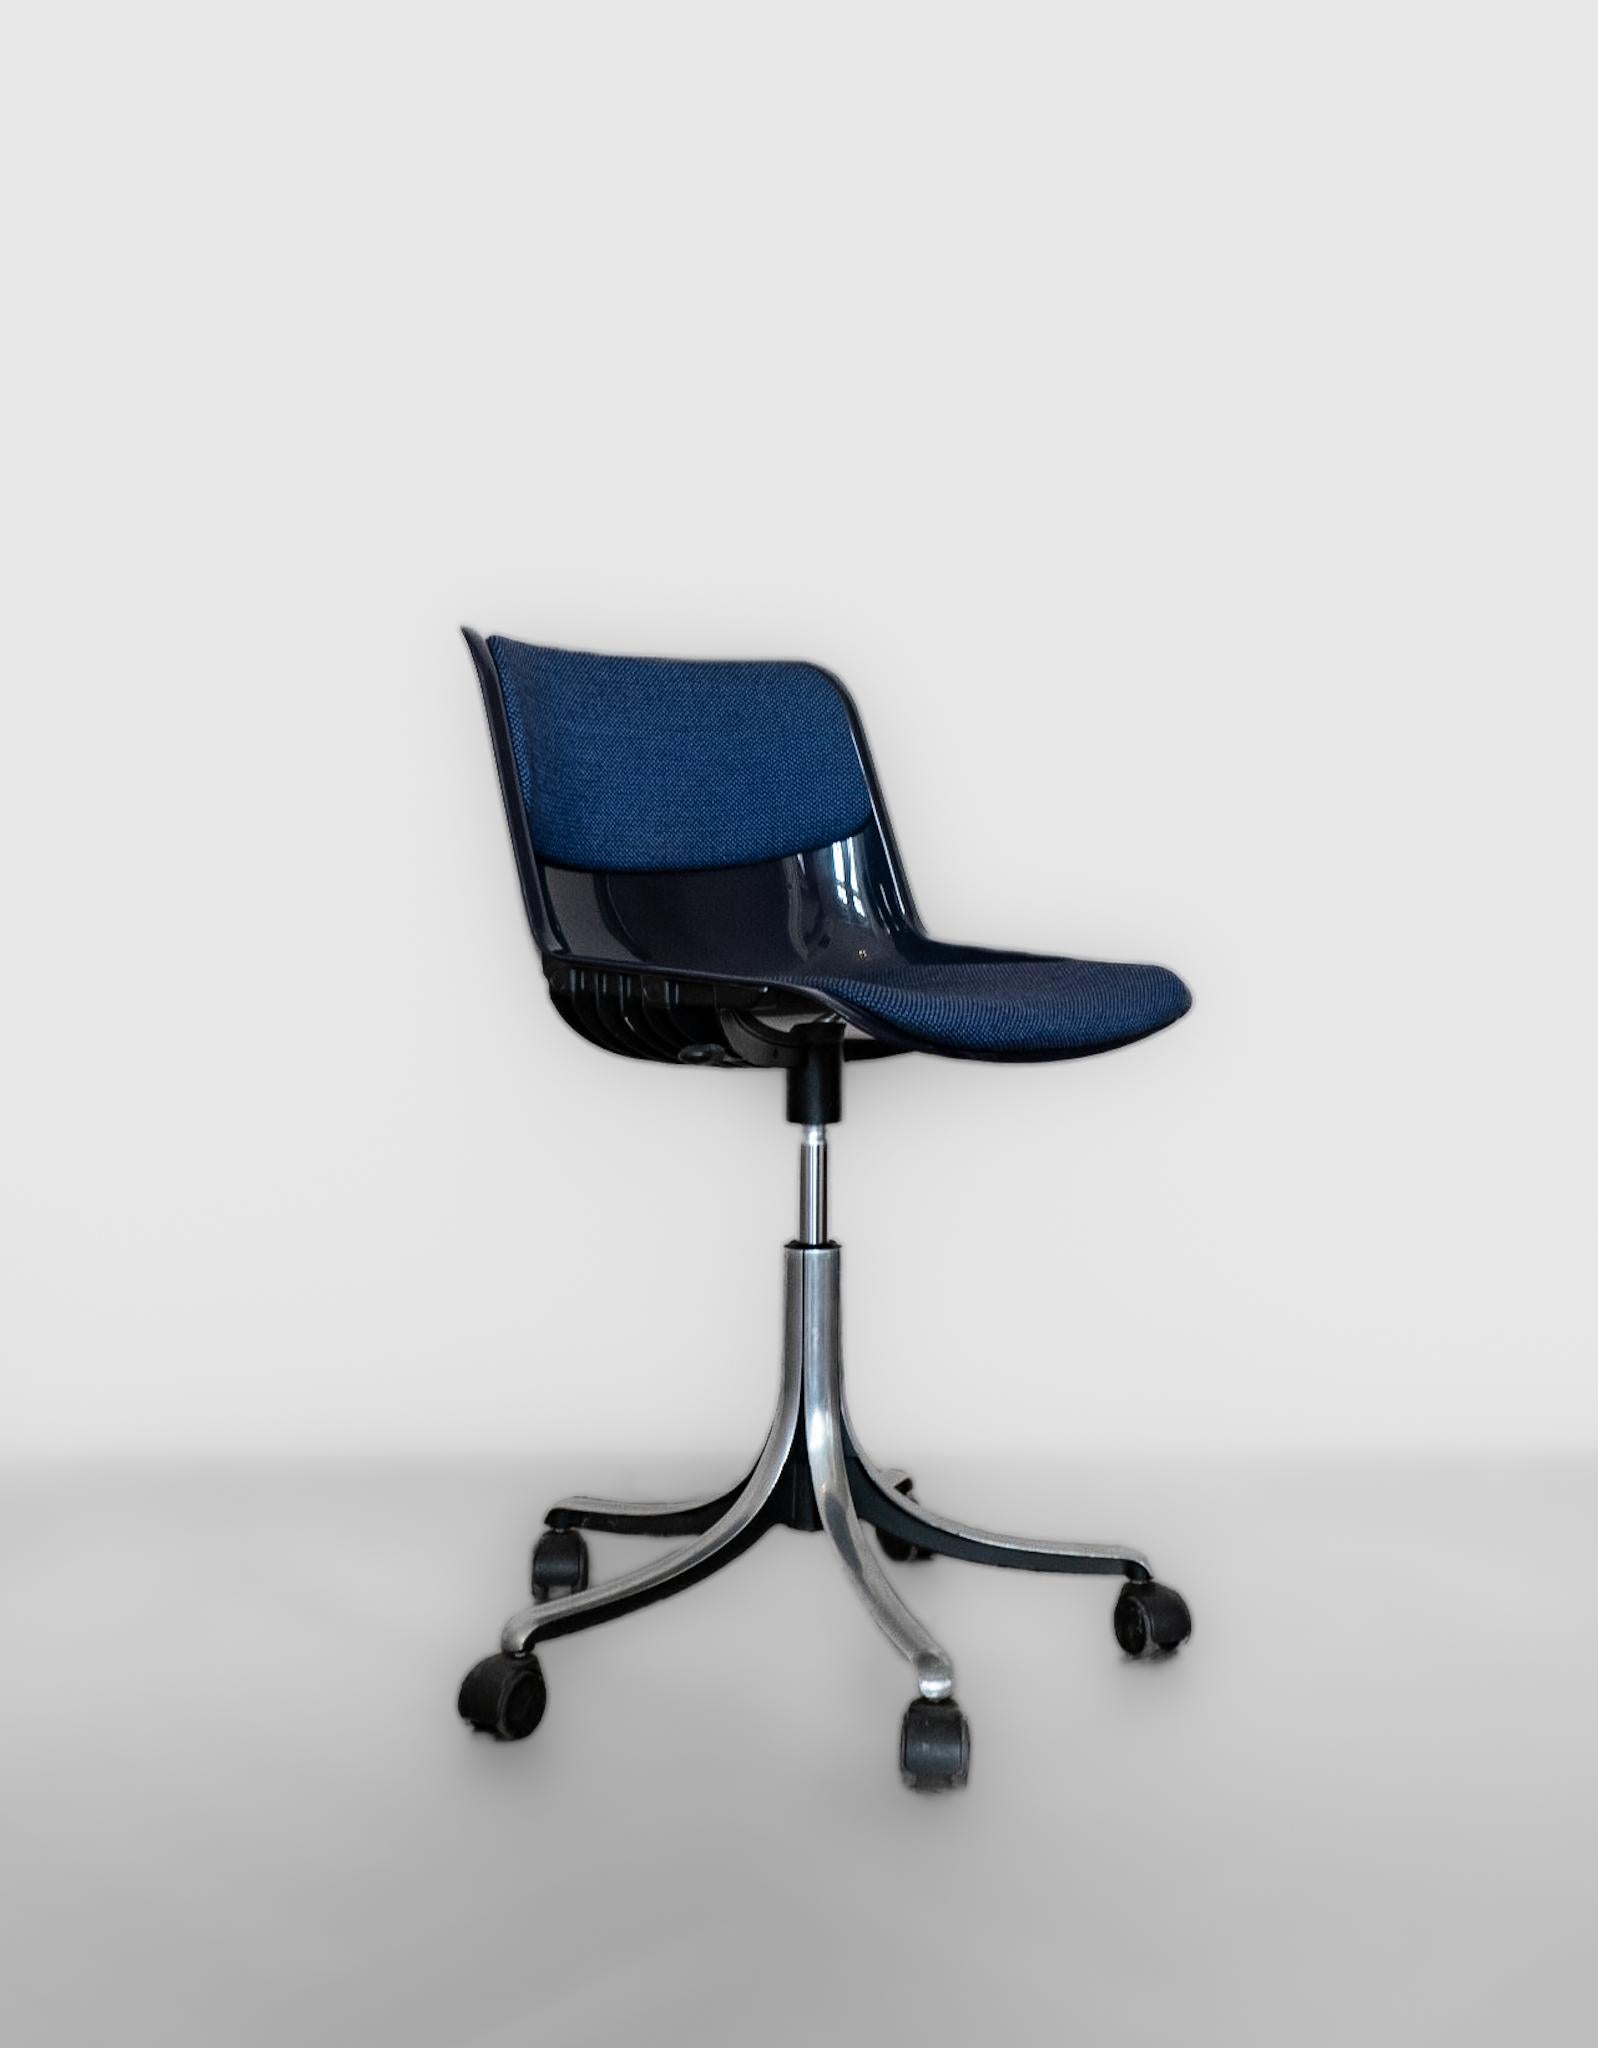 Mid-Century Modern Dark Blue Office Chair Modus 5 by Osvaldo Borsani, Italy 1970 For Sale 7